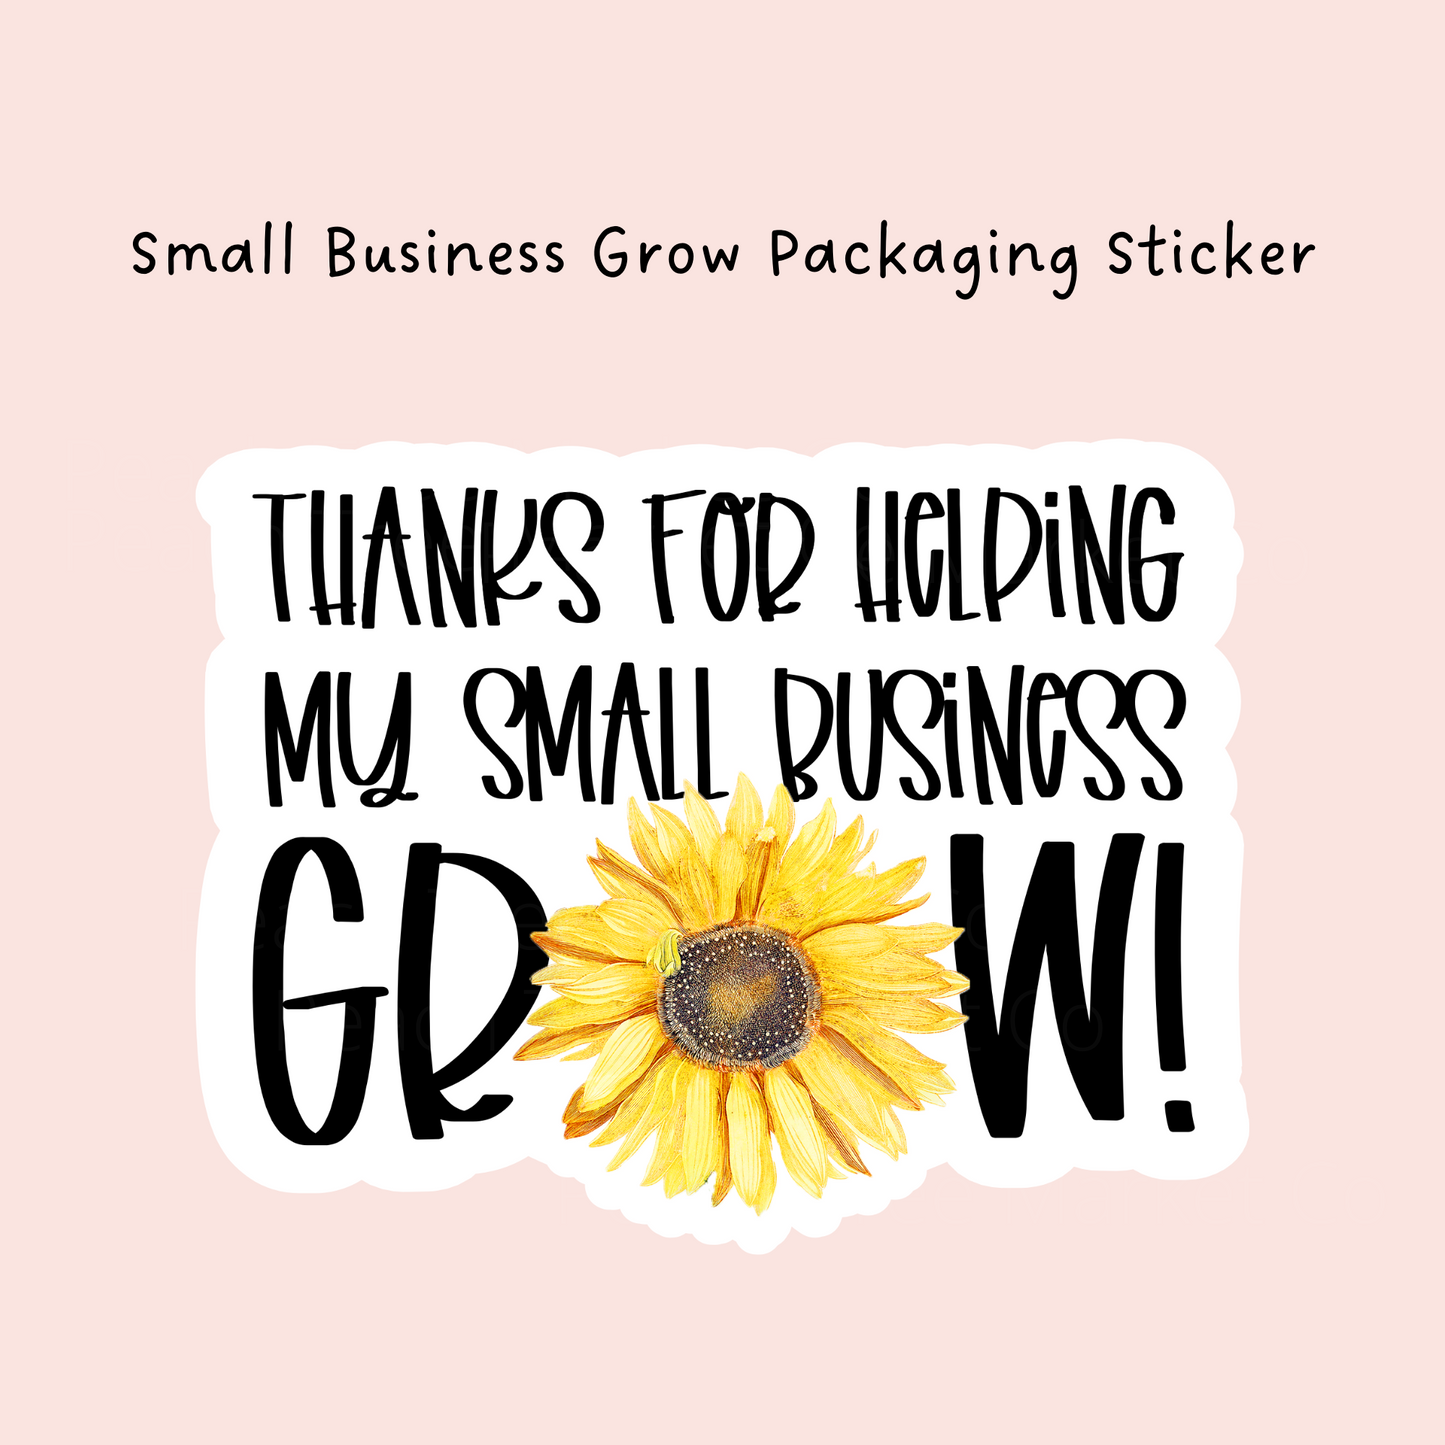 Small Business Grow Packaging Sticker